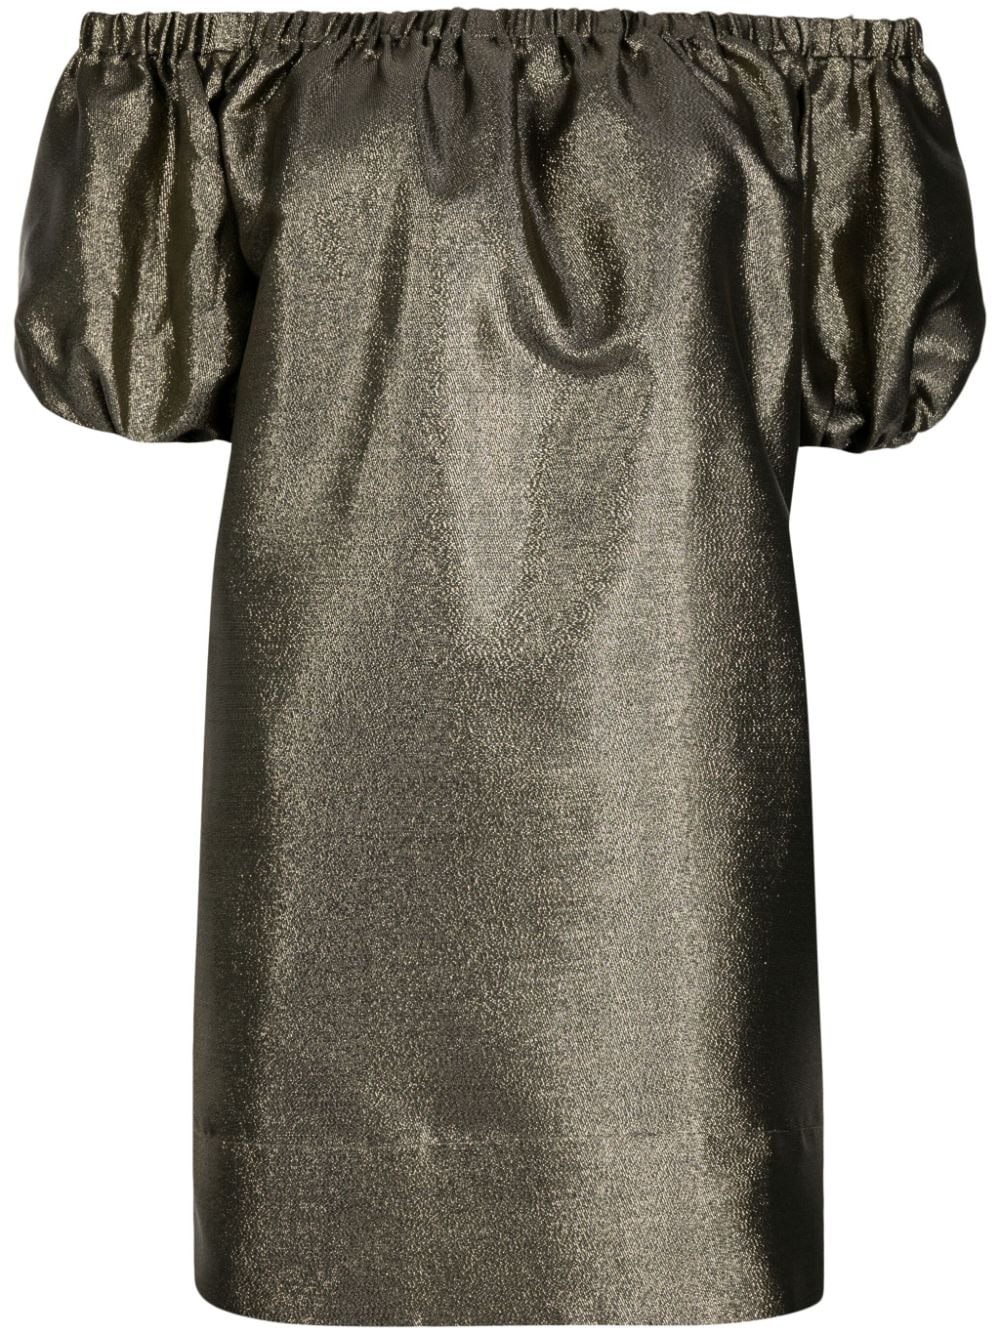 Cynthia Rowley off-shoulder metallic-finish minidress - Gold